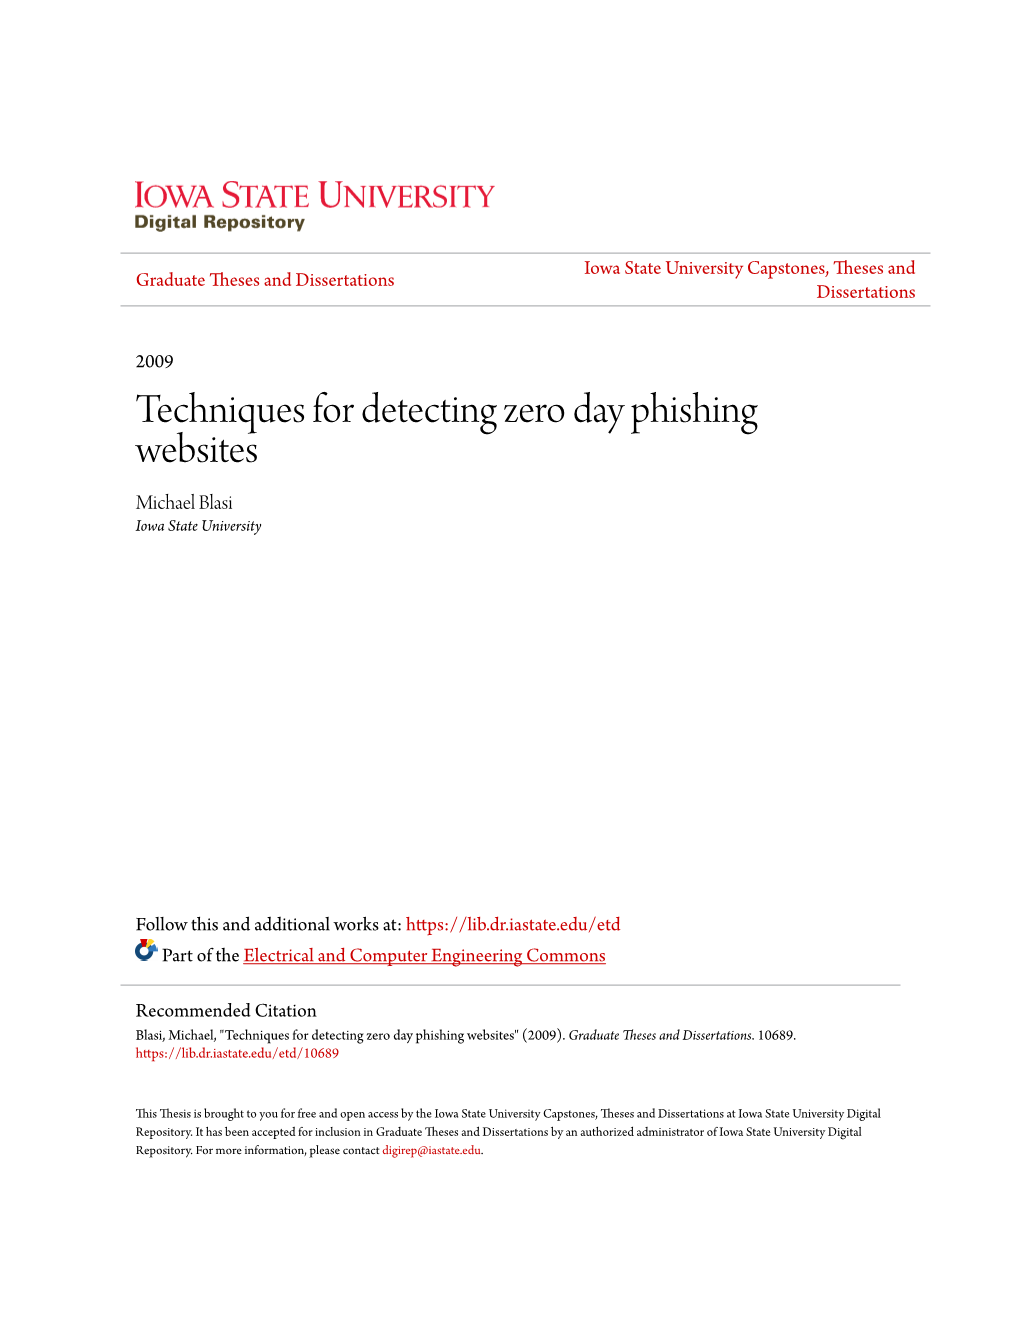 Techniques for Detecting Zero Day Phishing Websites Michael Blasi Iowa State University